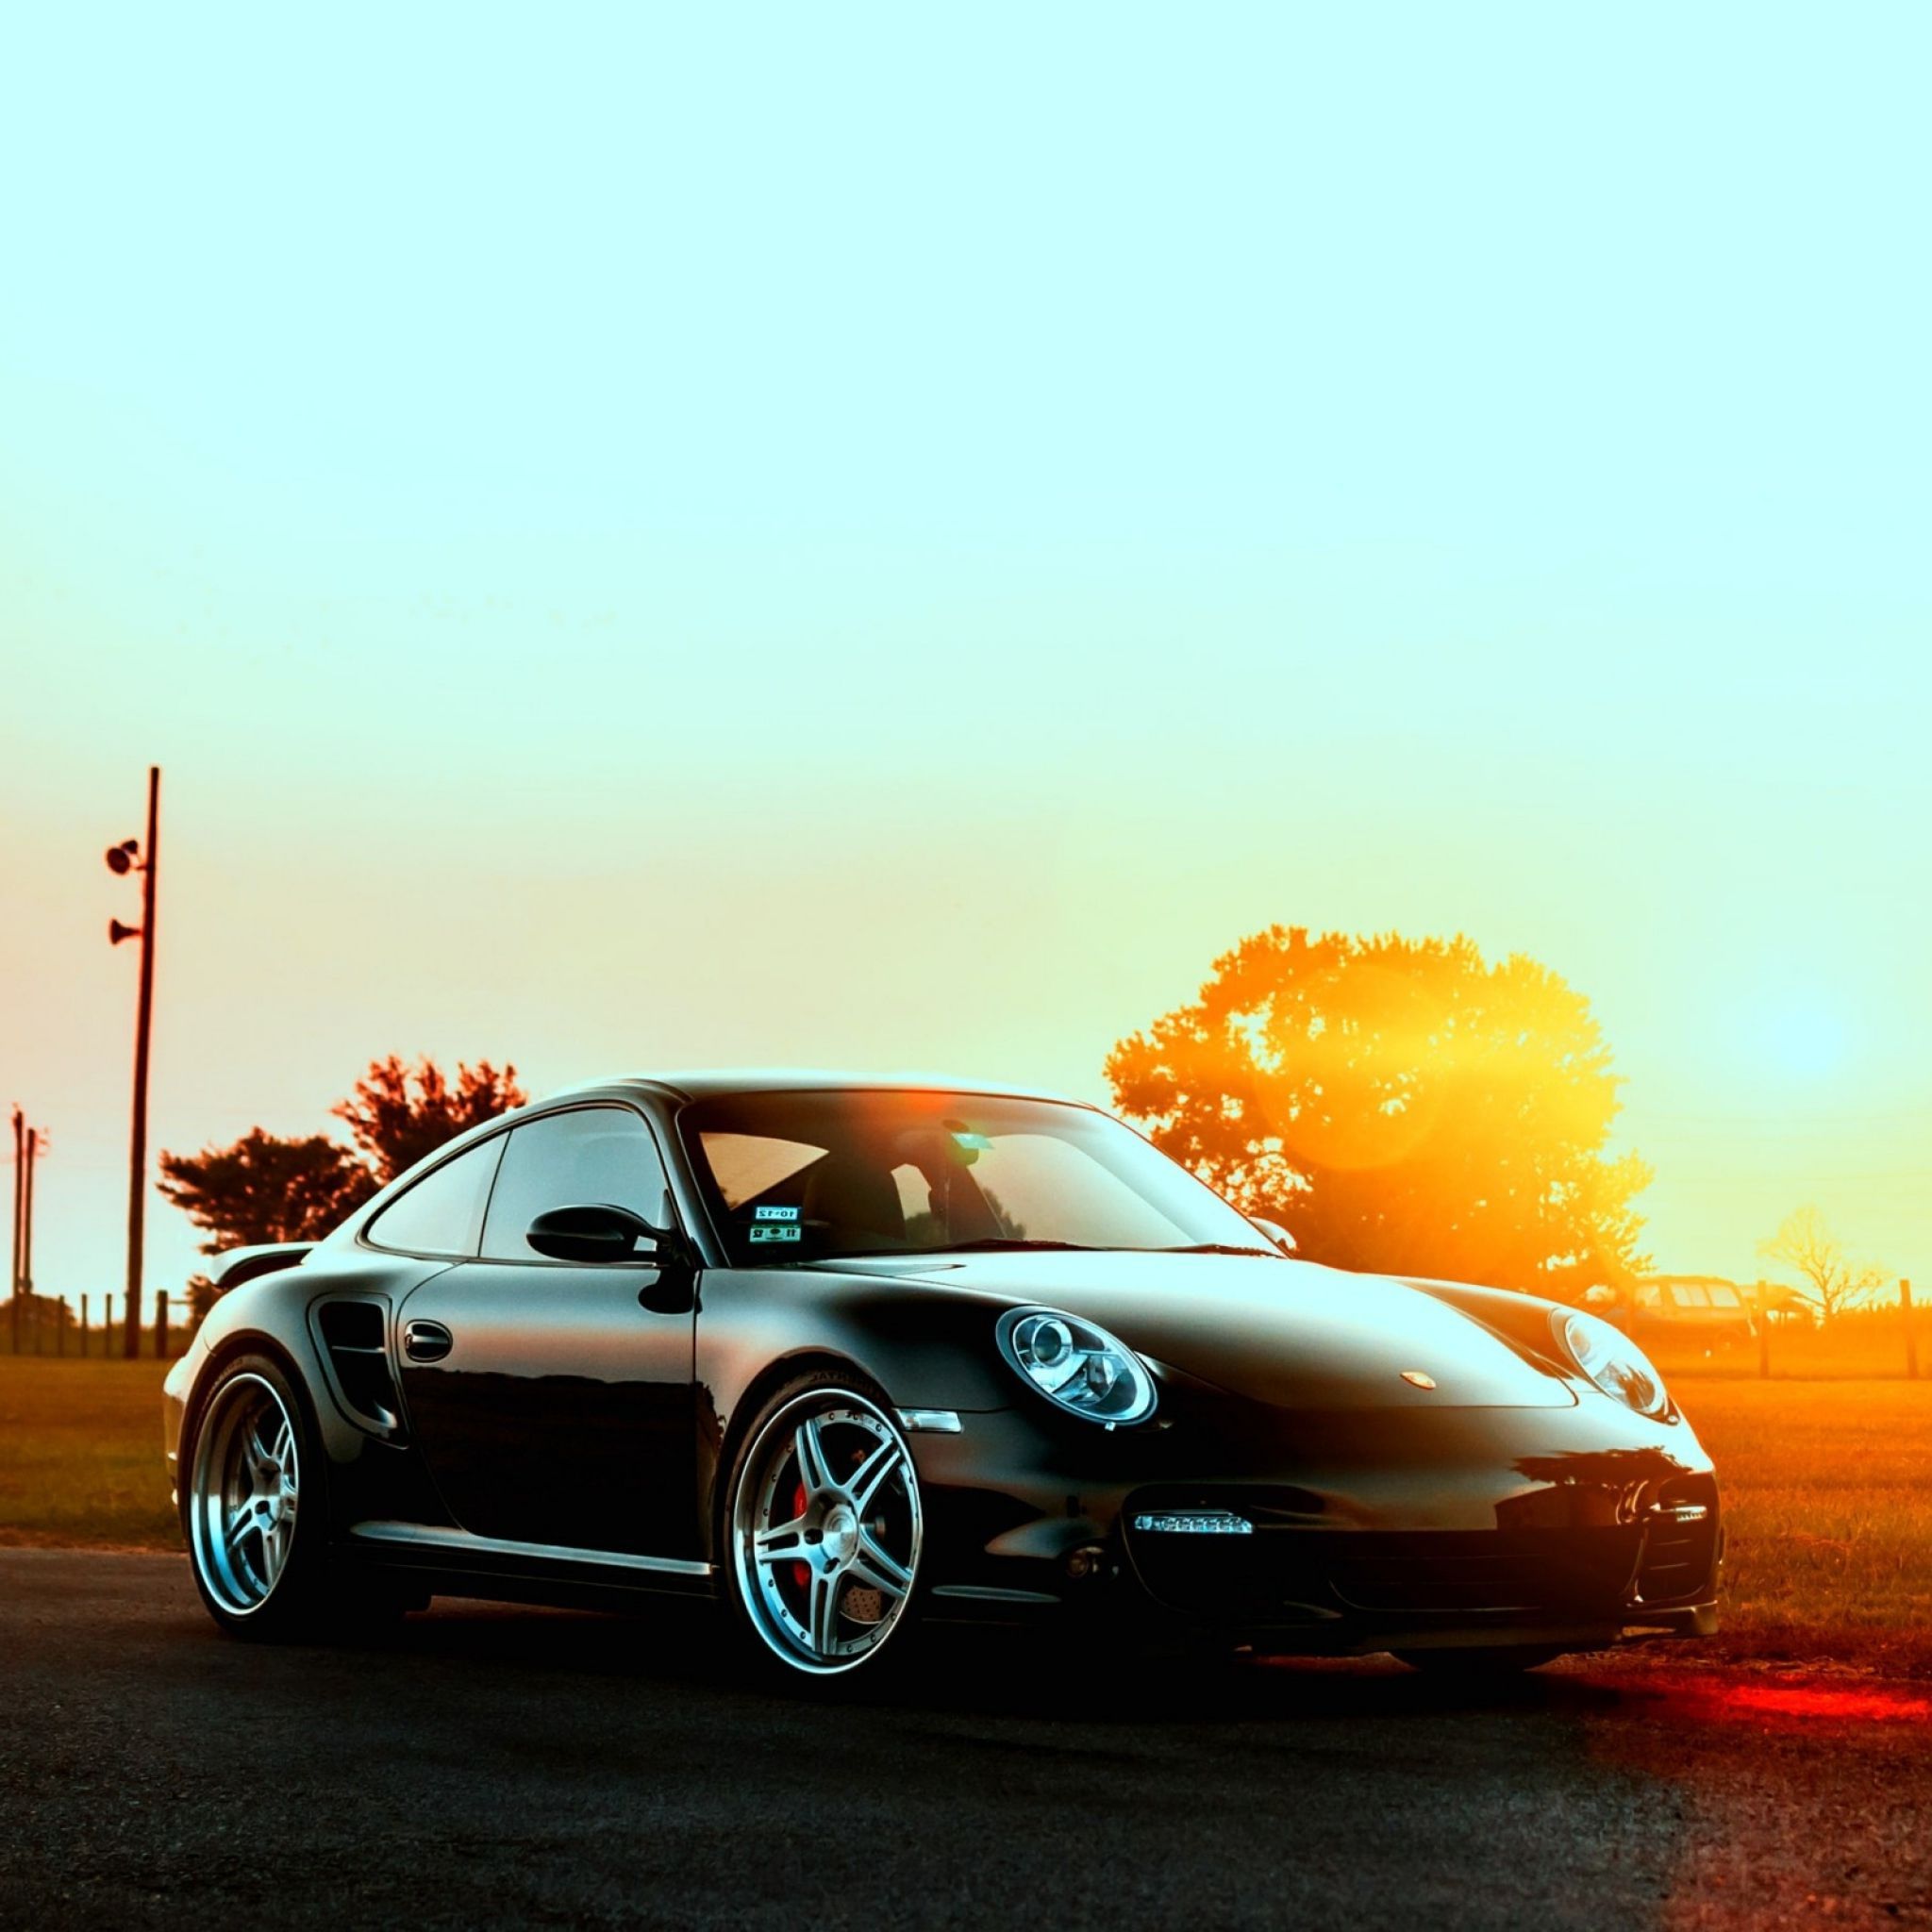 New Porsche Ipad Photos And Pictures, Porsche Ipad - Black Car Sunset , HD Wallpaper & Backgrounds